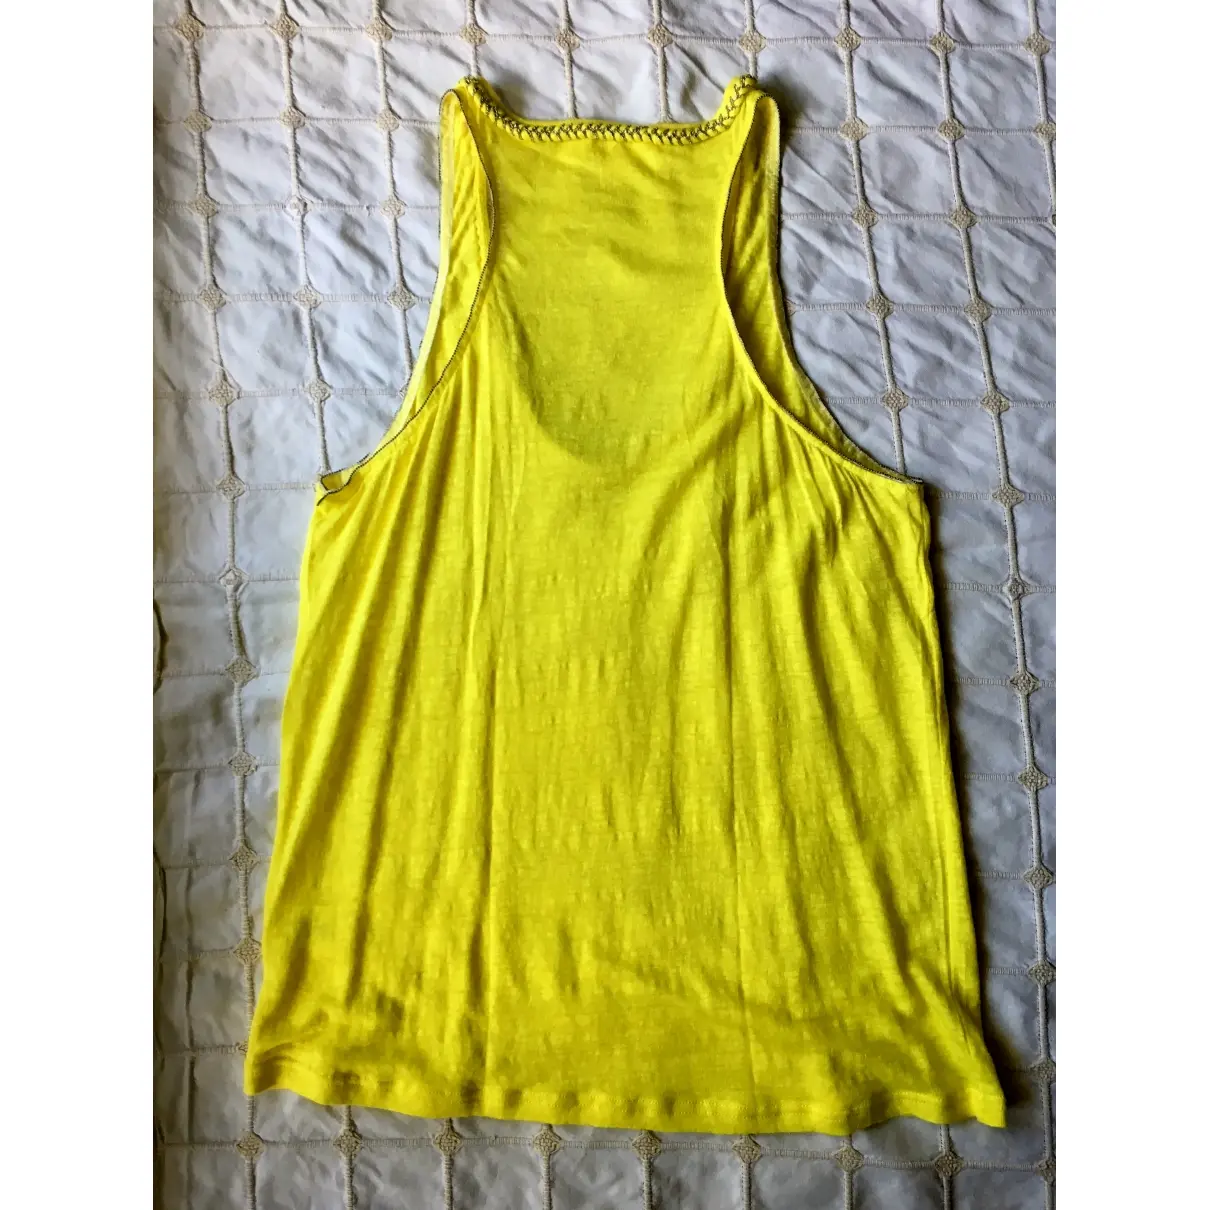 Bel Air Linen vest for sale